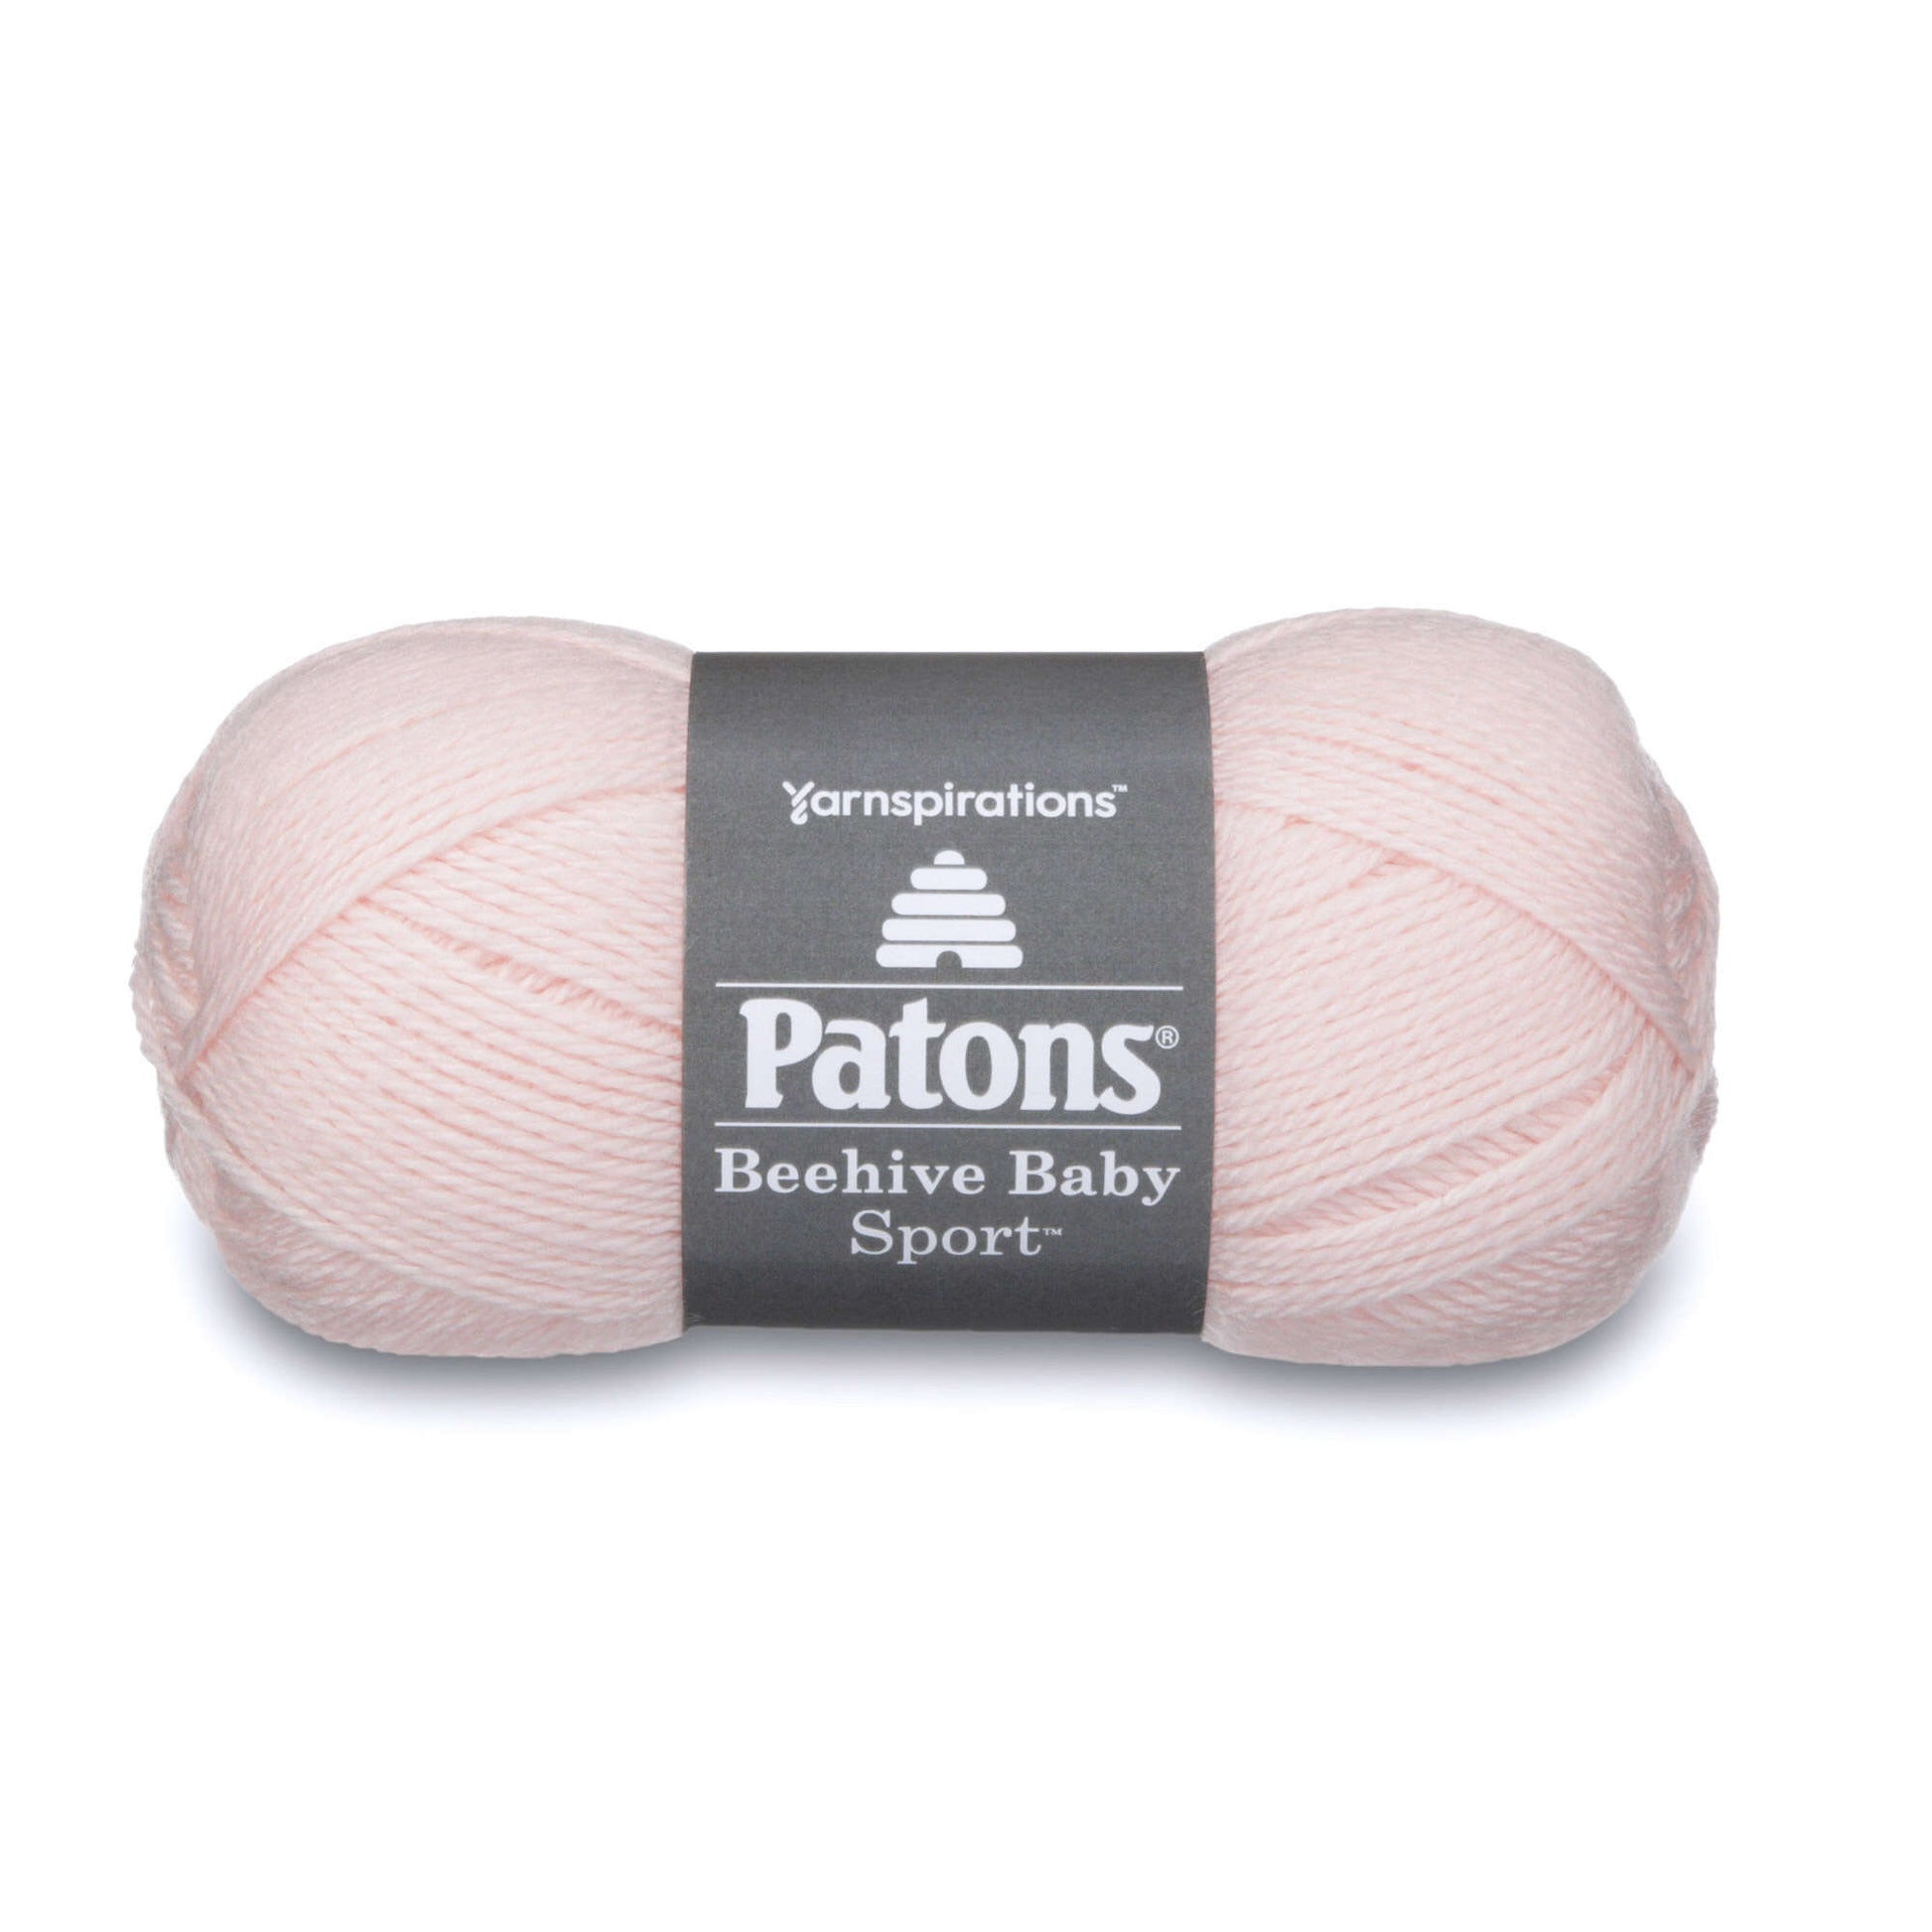 Patons Beehive Baby Sport Yarn | Yarnspirations